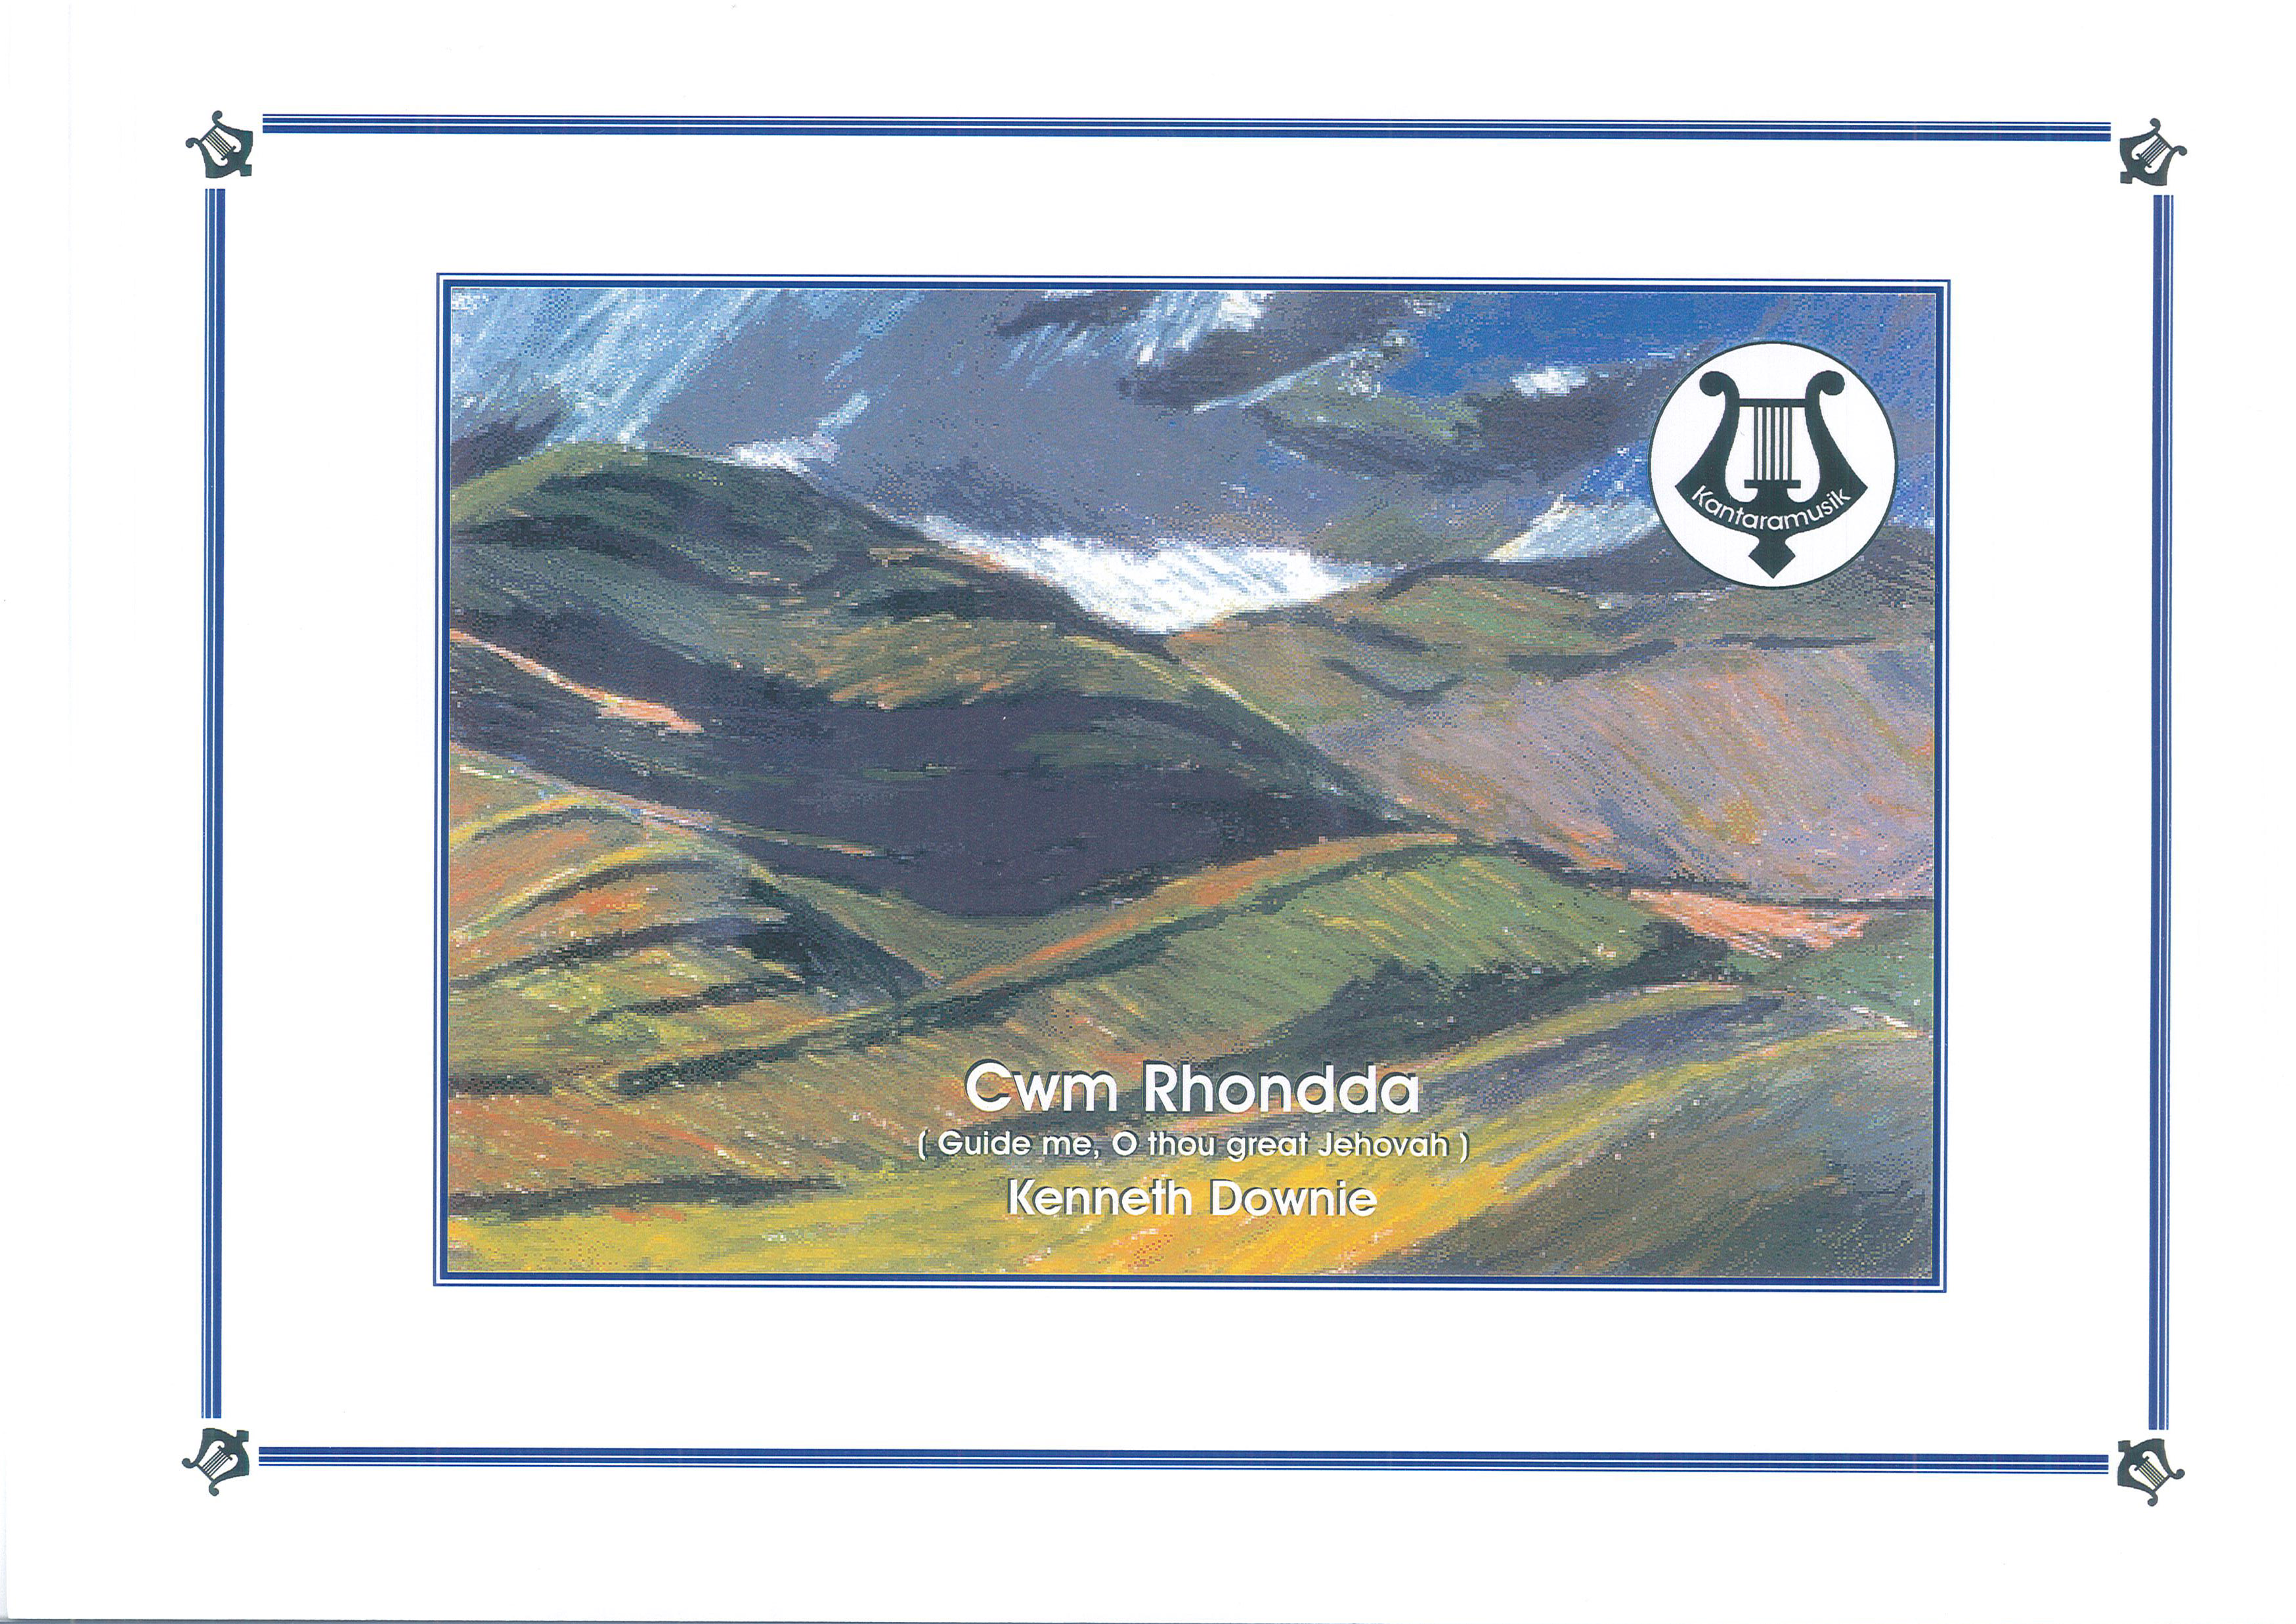 Cwm Rhondda (Brass Band - Score and Parts)